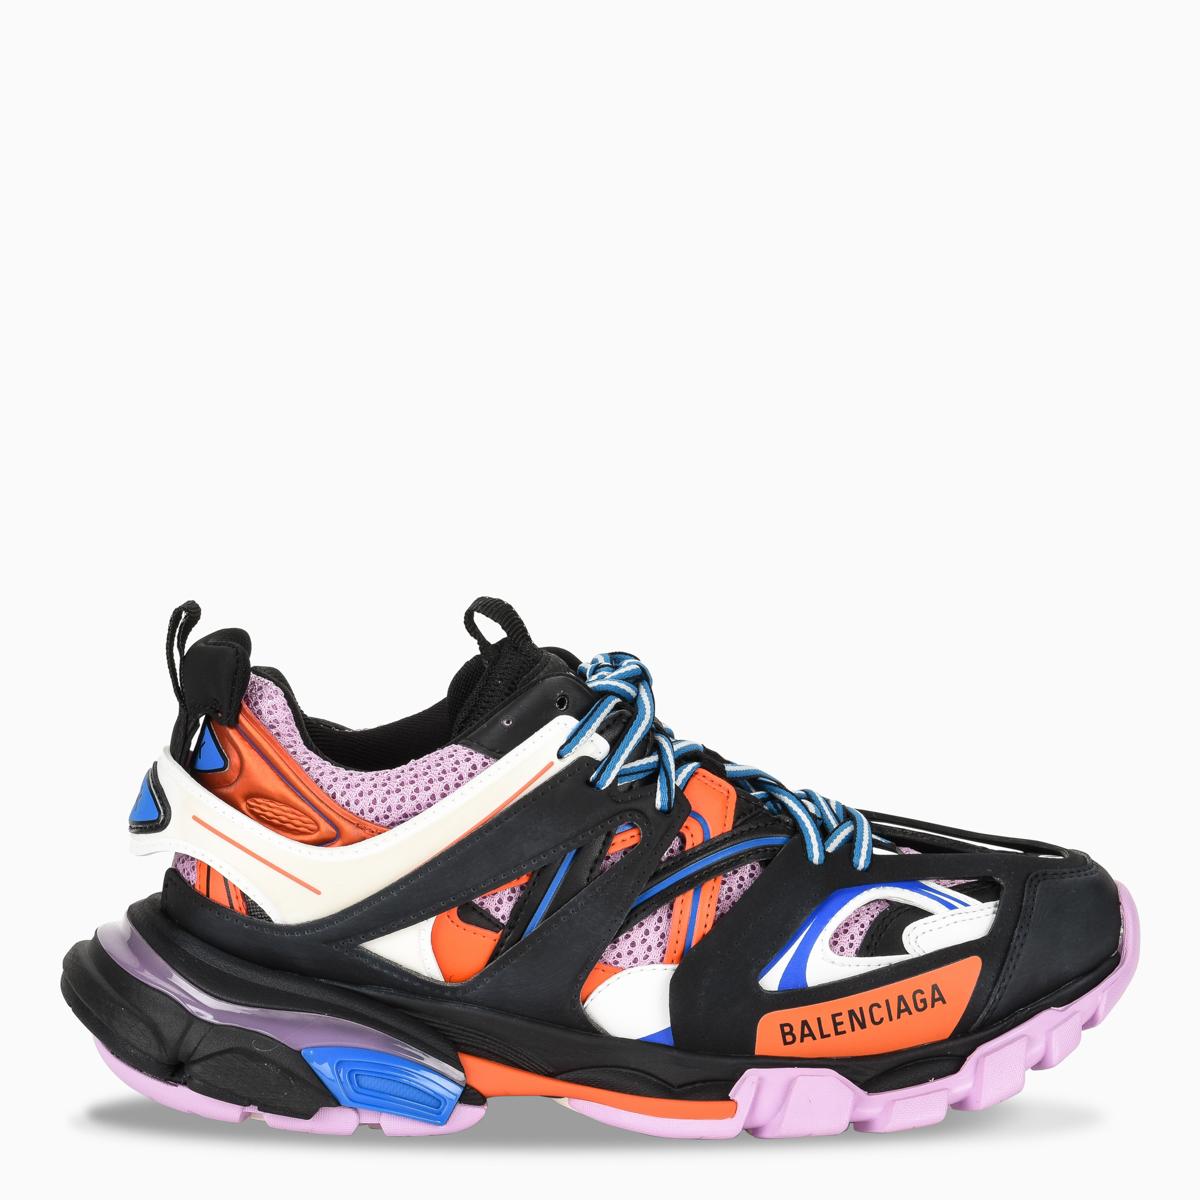 balenciaga sneakers track orange